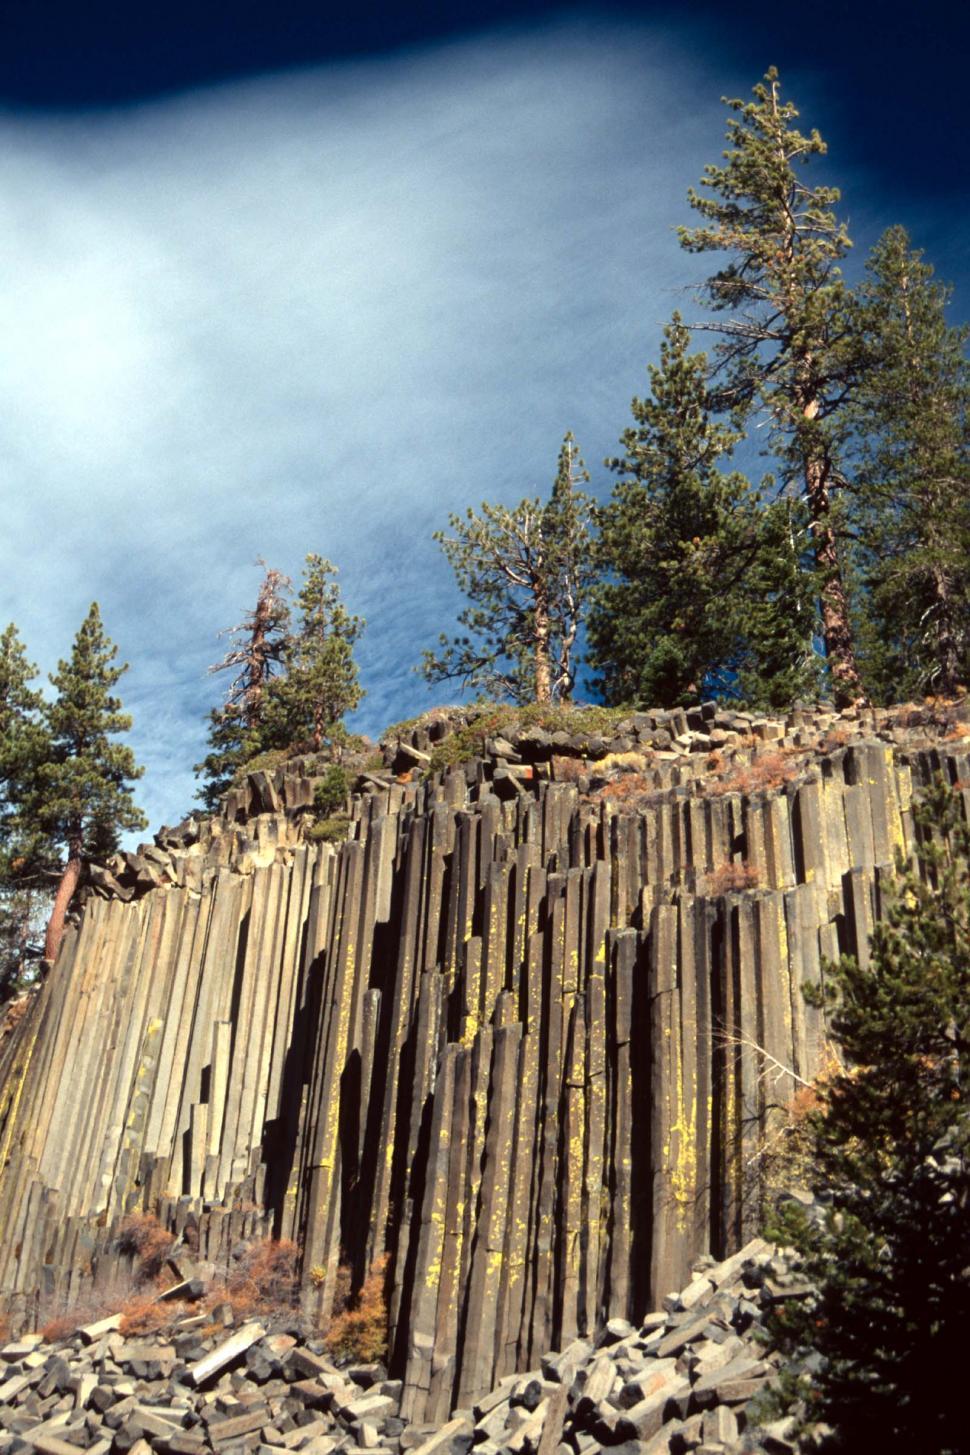 Free Image of pines trees mountains rocks devils postpile national monument columns basalt wilderness geological formation dramatic rubble piles fractures cracks stacks landscape 